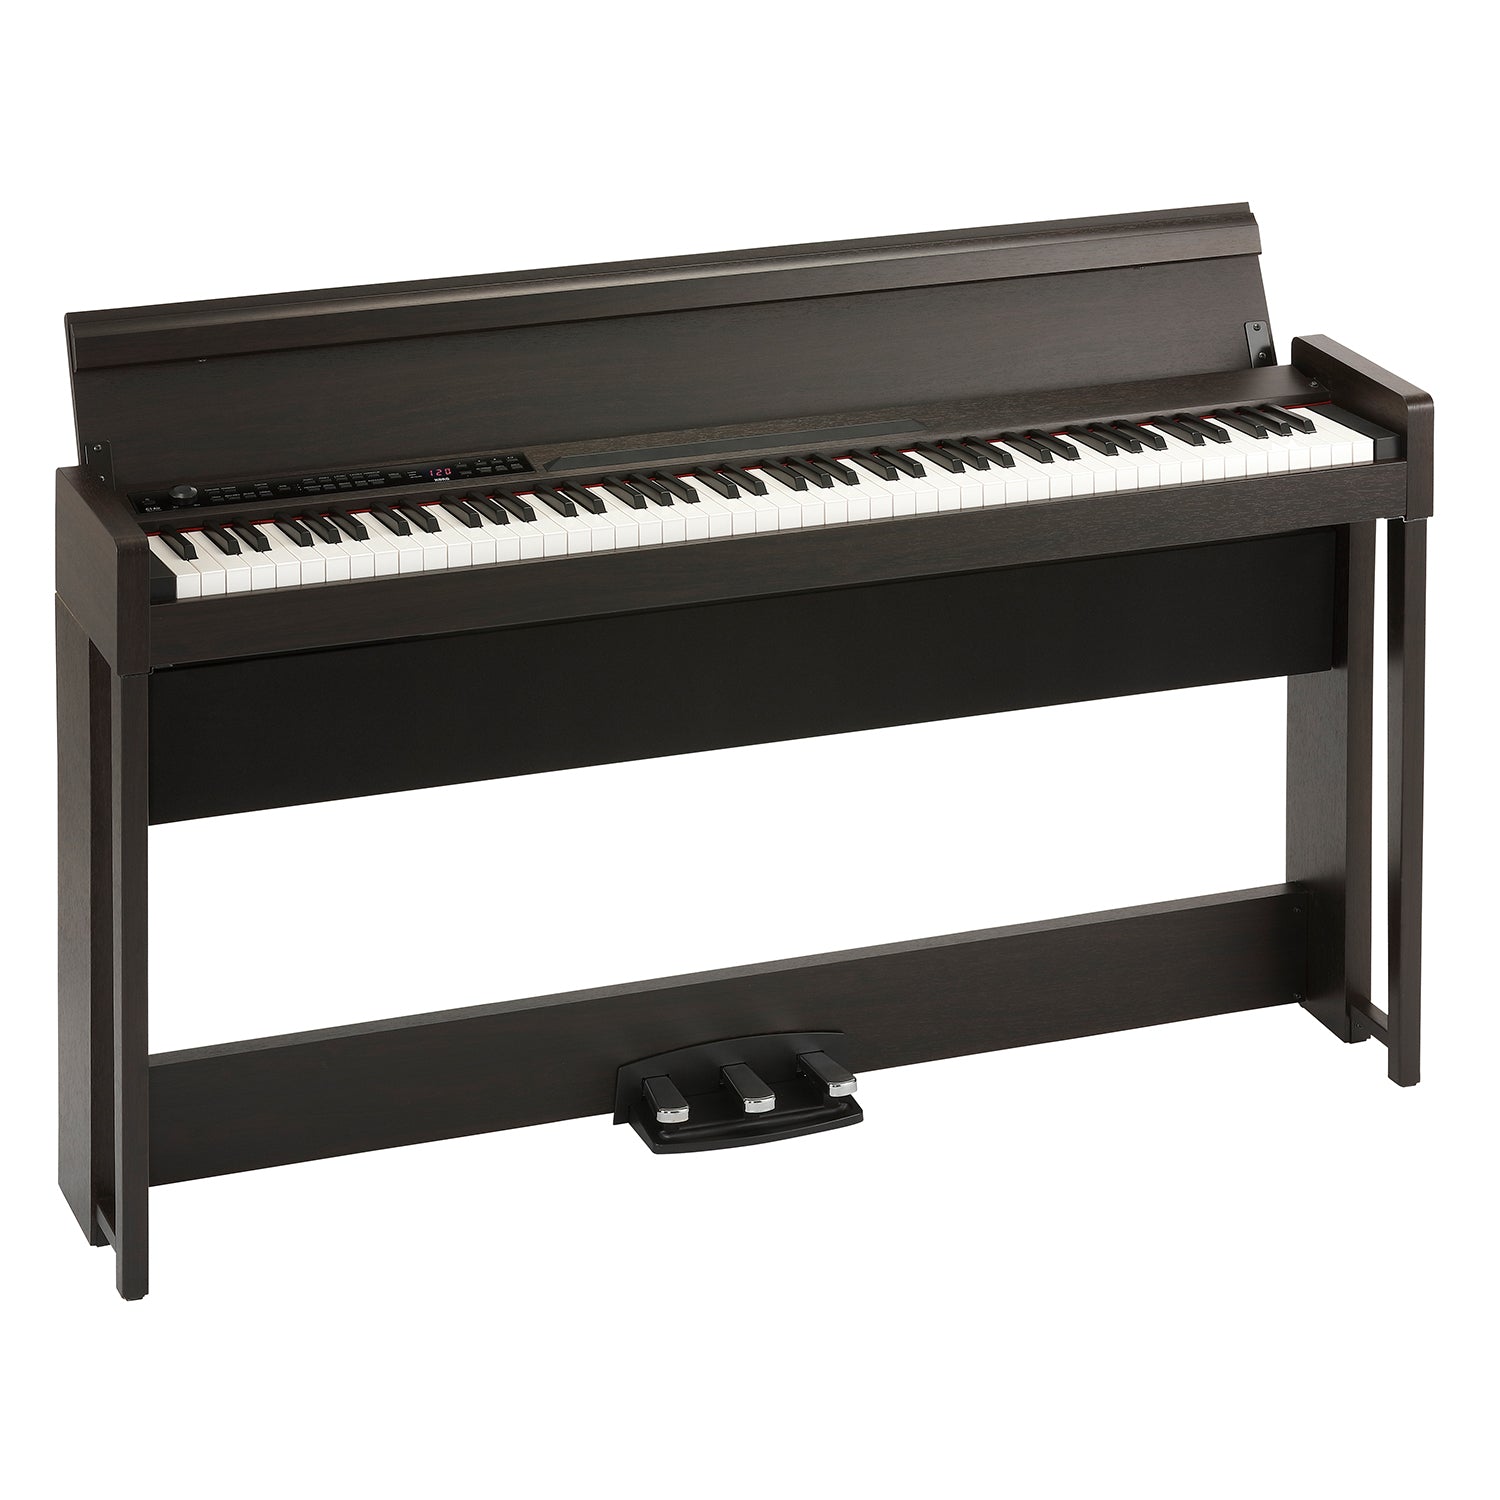 C1 Air Digital Piano - Rosewood Brown KORG USA Official Store